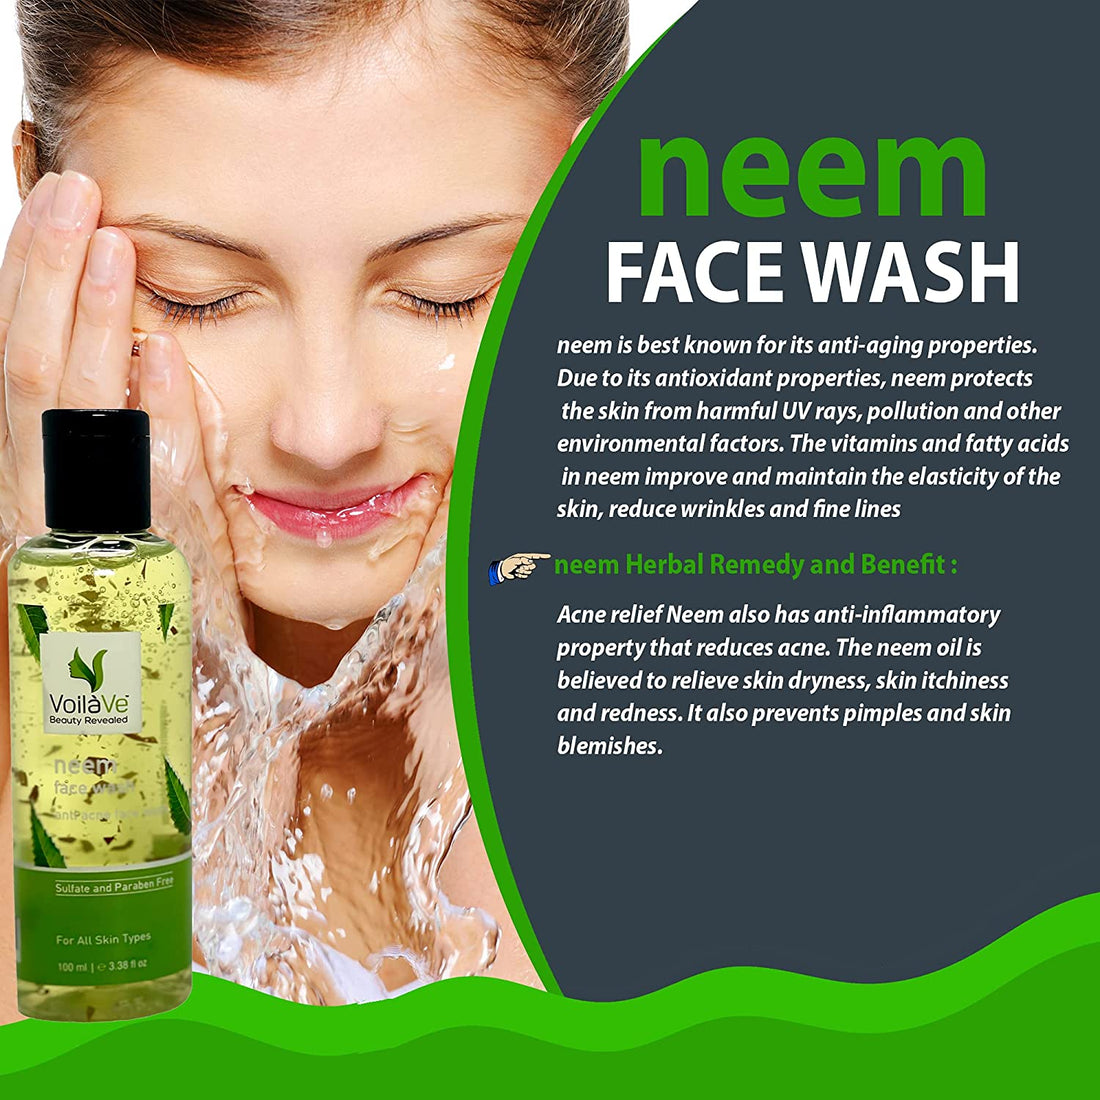 VoilaVe Aloe Vera Face Wash